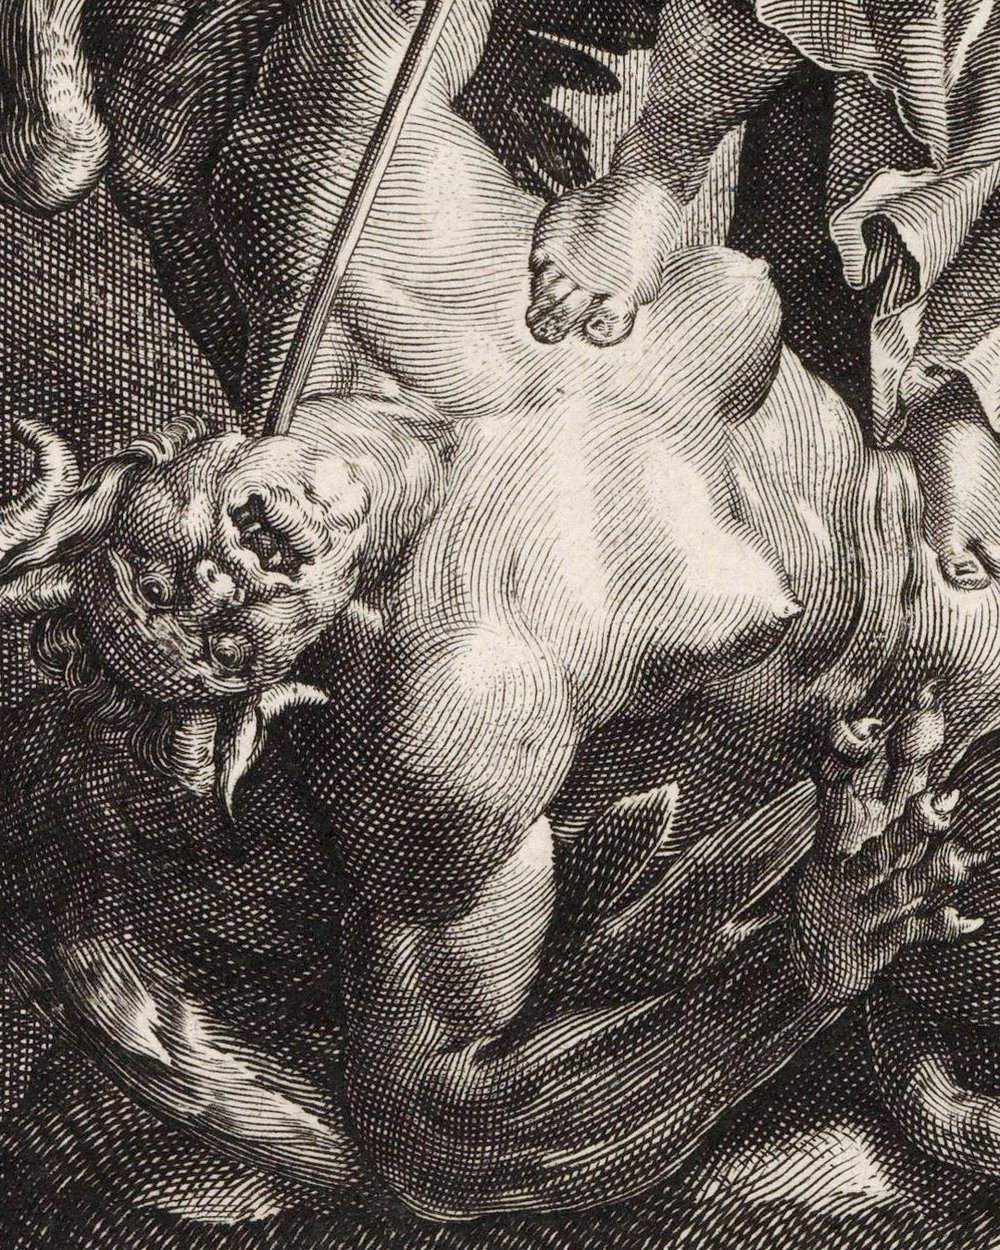 ''Archangel Michael'' (1595 - 1604)